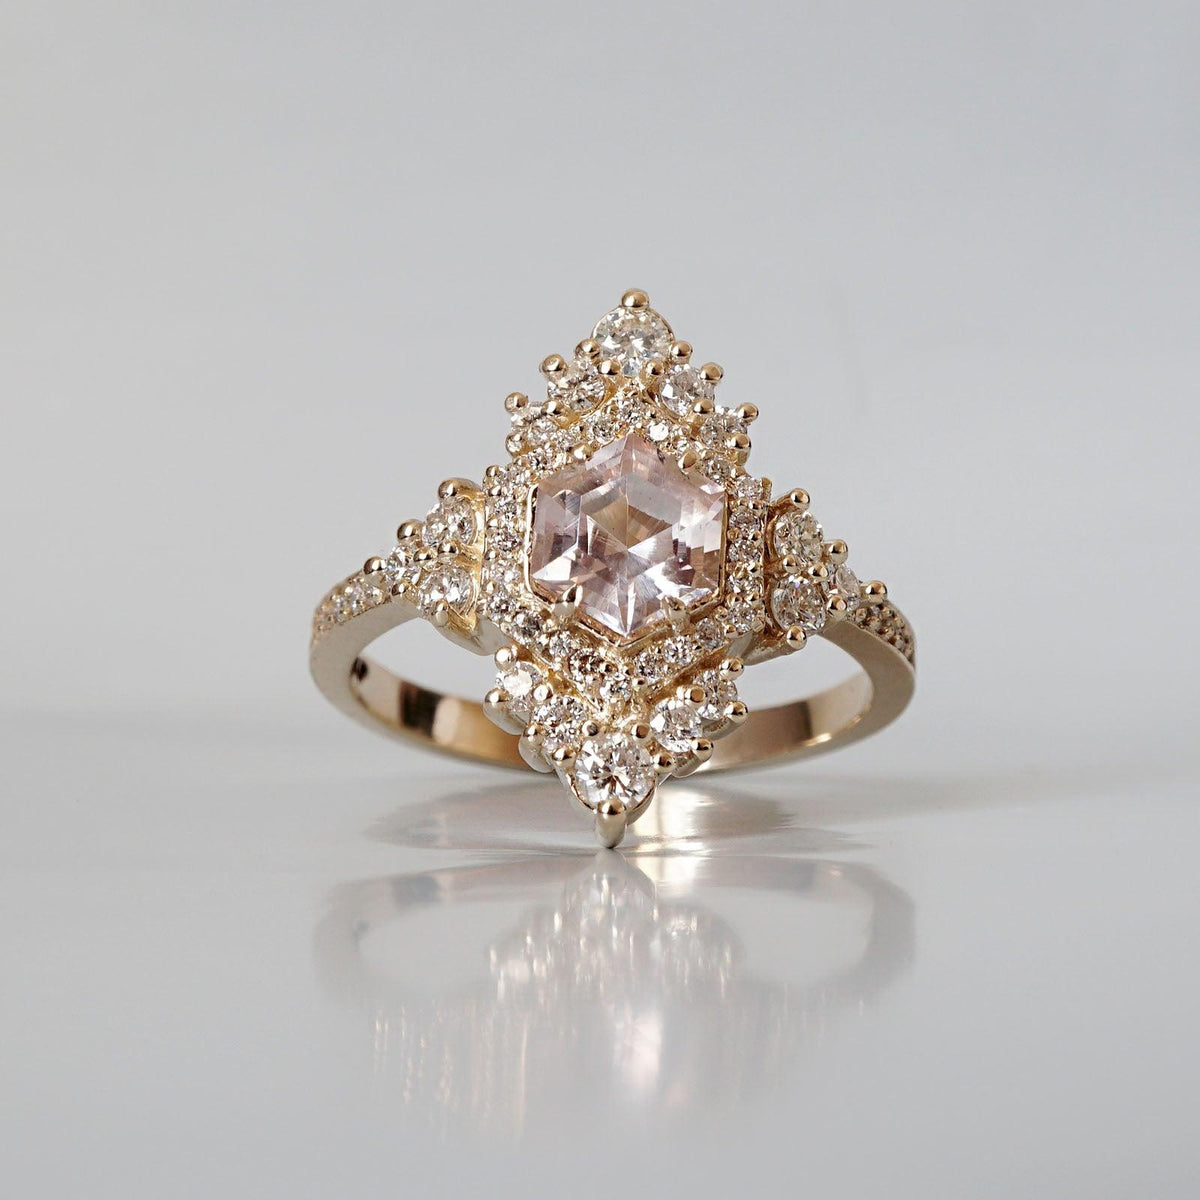 Chandelier Morganite Diamond Ring in 14K and 18K Gold - Tippy Taste Jewelry